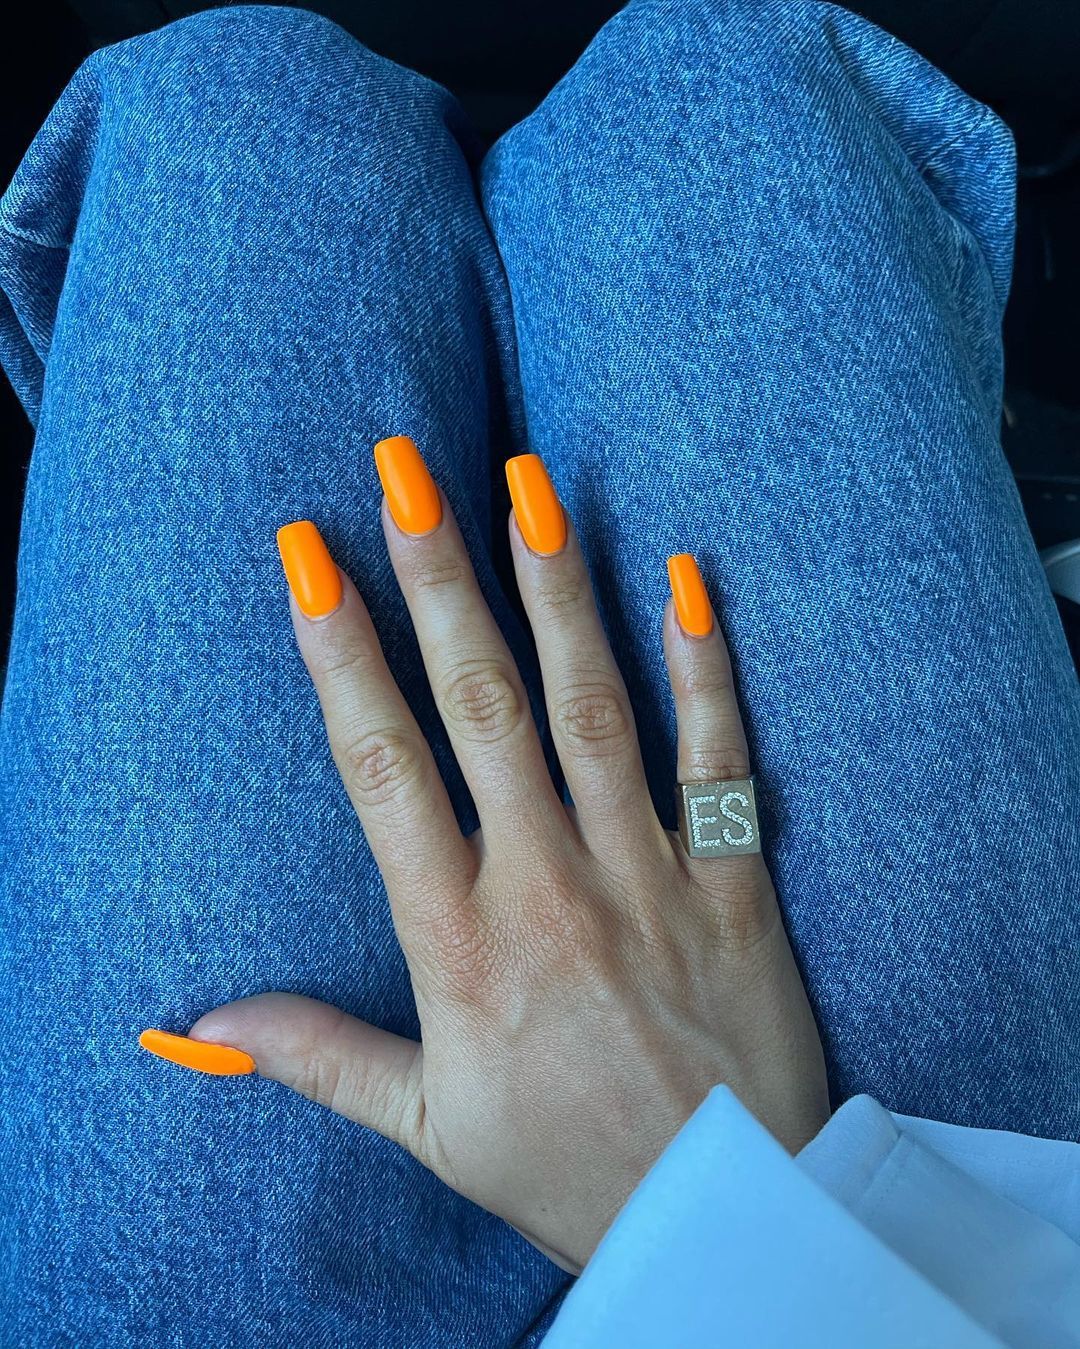 Detalle de las uñas en naranja de Emili Sindlev.